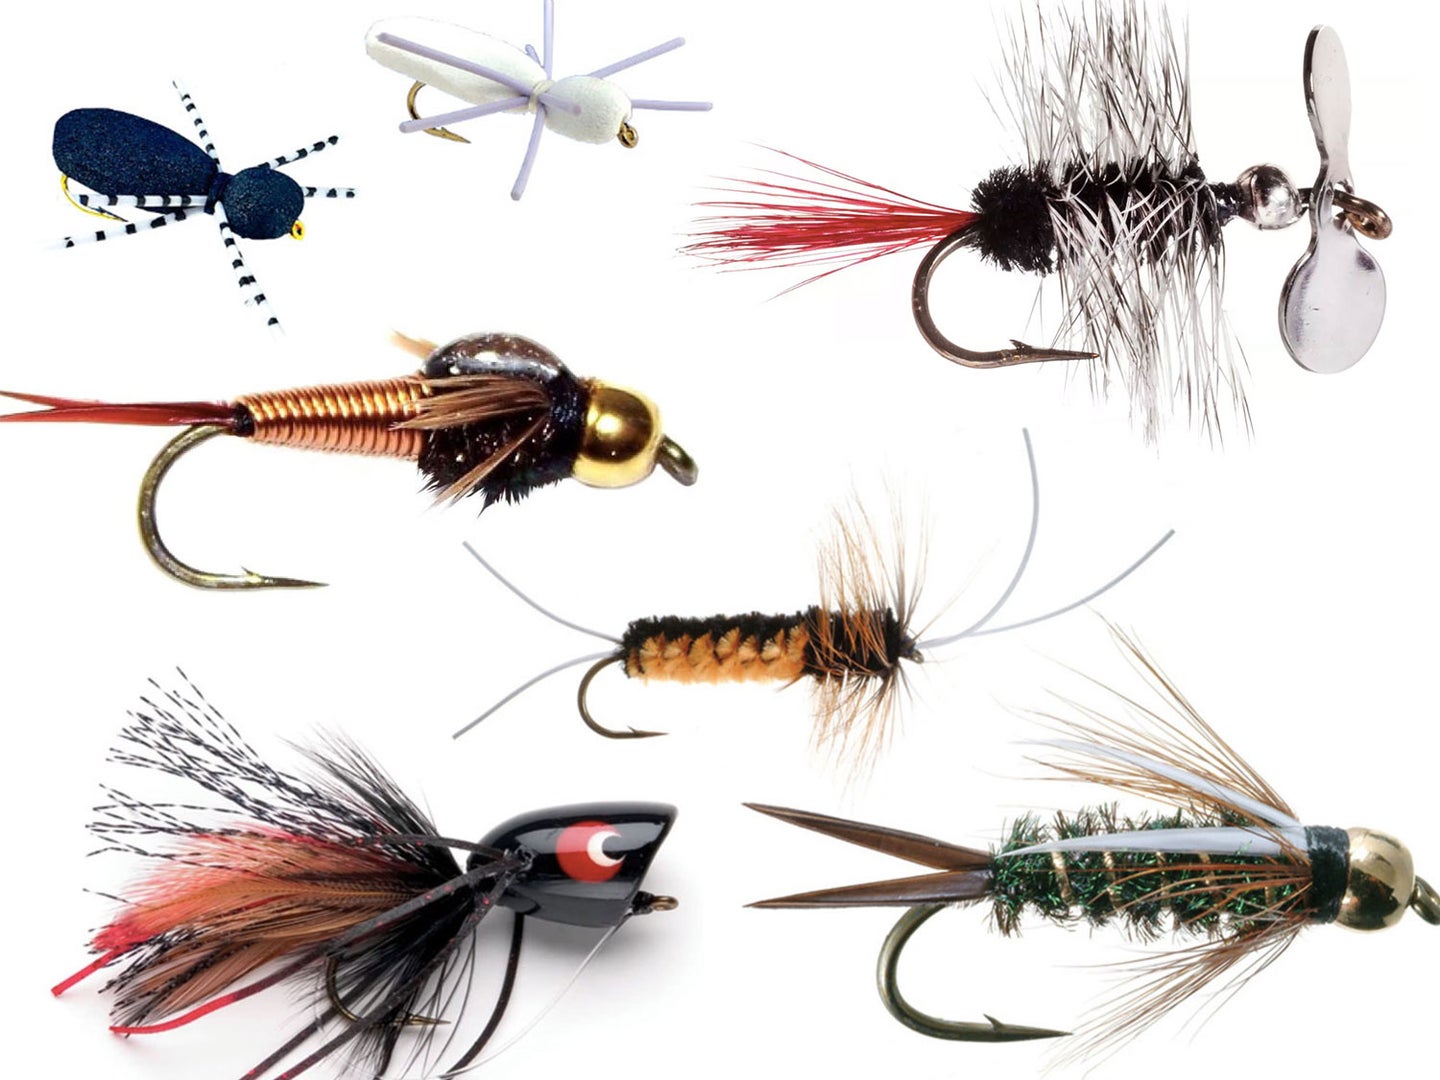 Deer Hair Streamer, Bass Fly, Fly Fishing Flies, Fly Fishing, Streamer,  Panfish, Trout Flies, Bait Fish, Deer Hair, Bass, Trout, Freshwater -   Canada